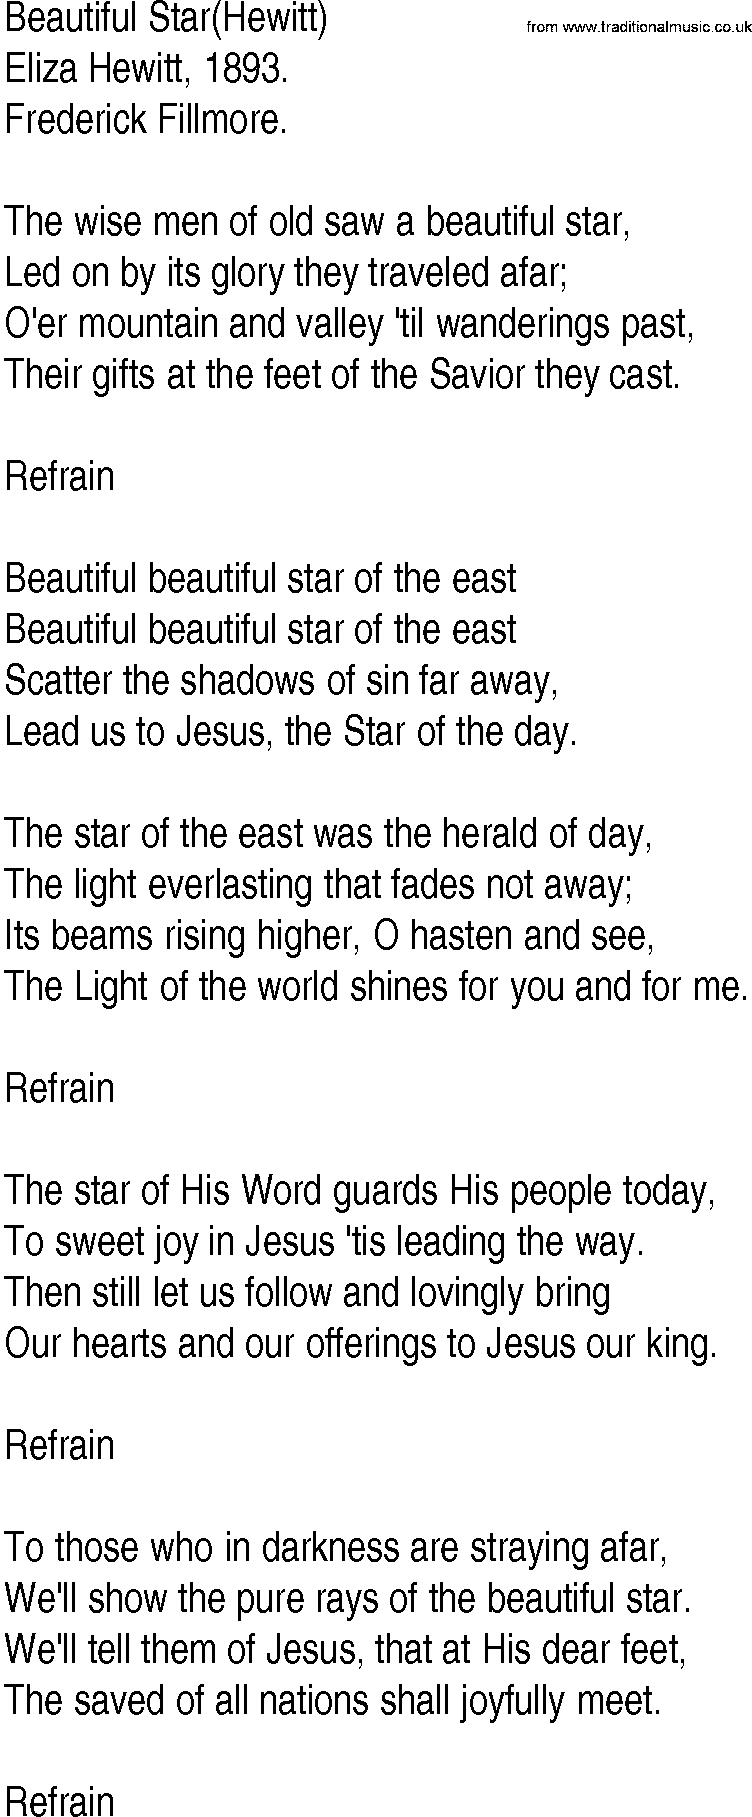 Hymn and Gospel Song: Beautiful Star(Hewitt) by Eliza Hewitt lyrics